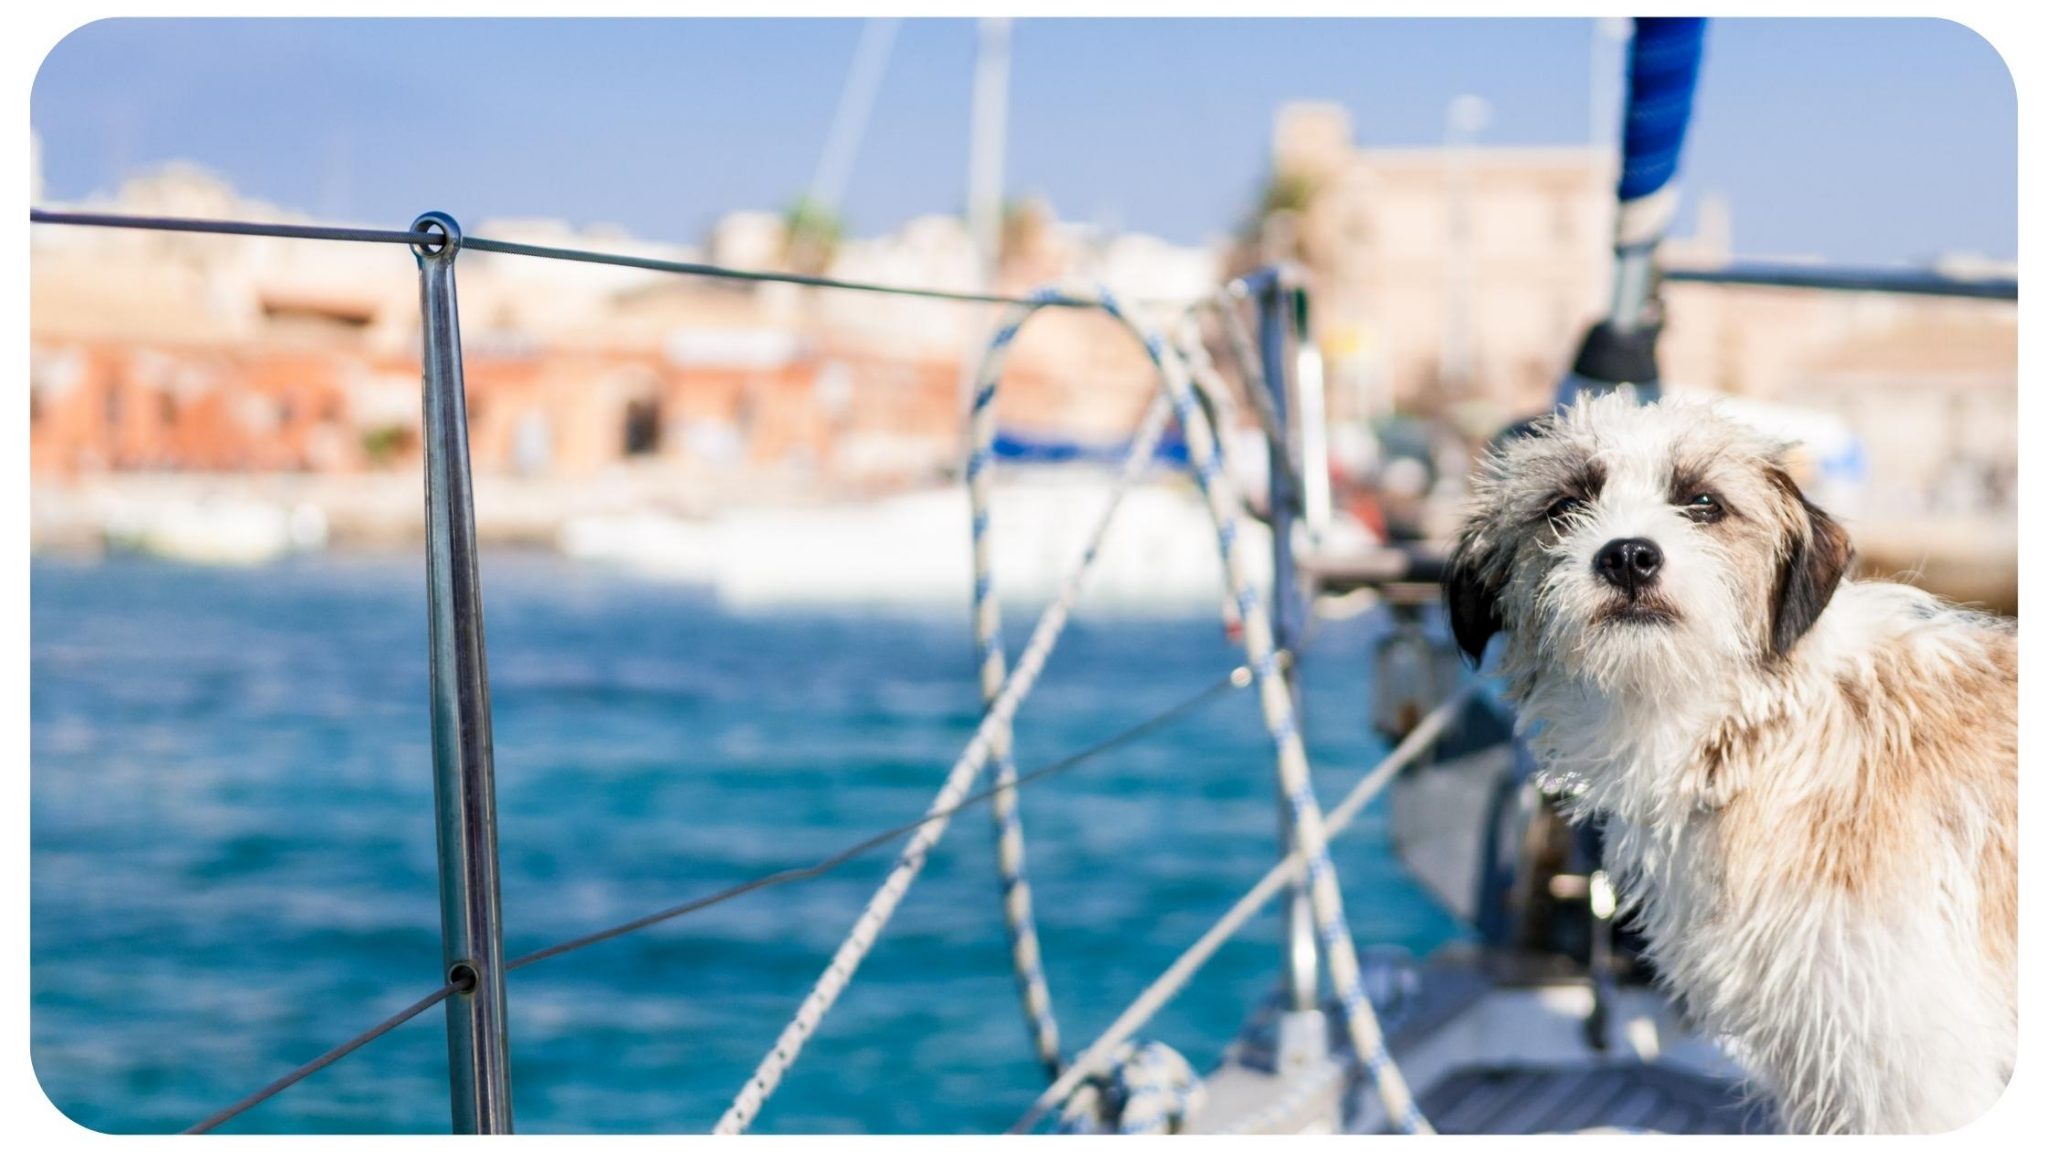 dog living on sailboat